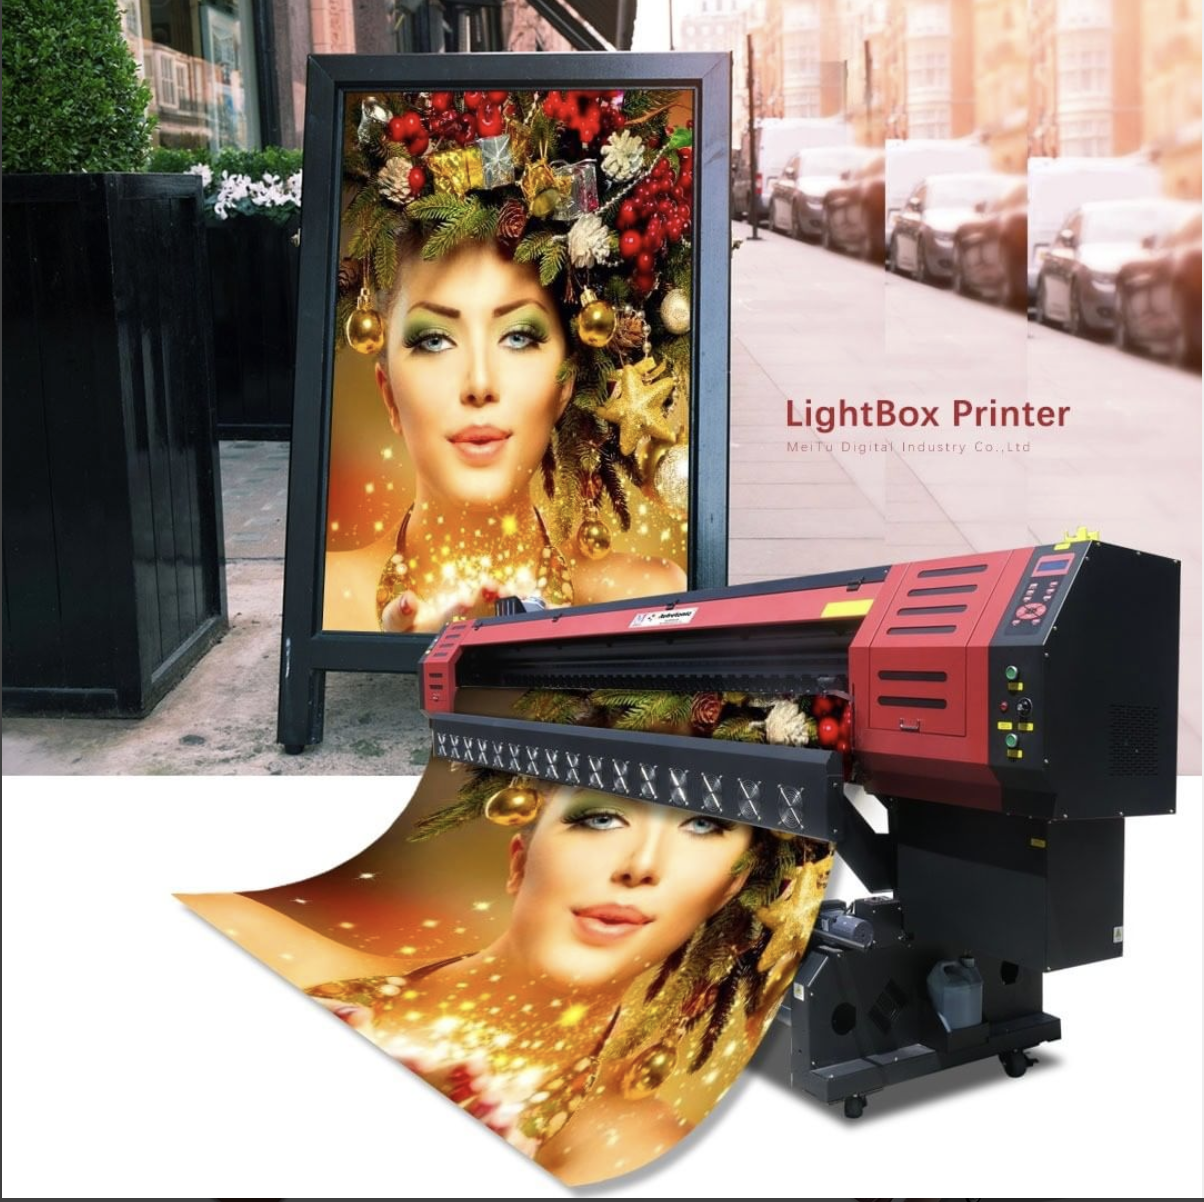 LightBox Printer